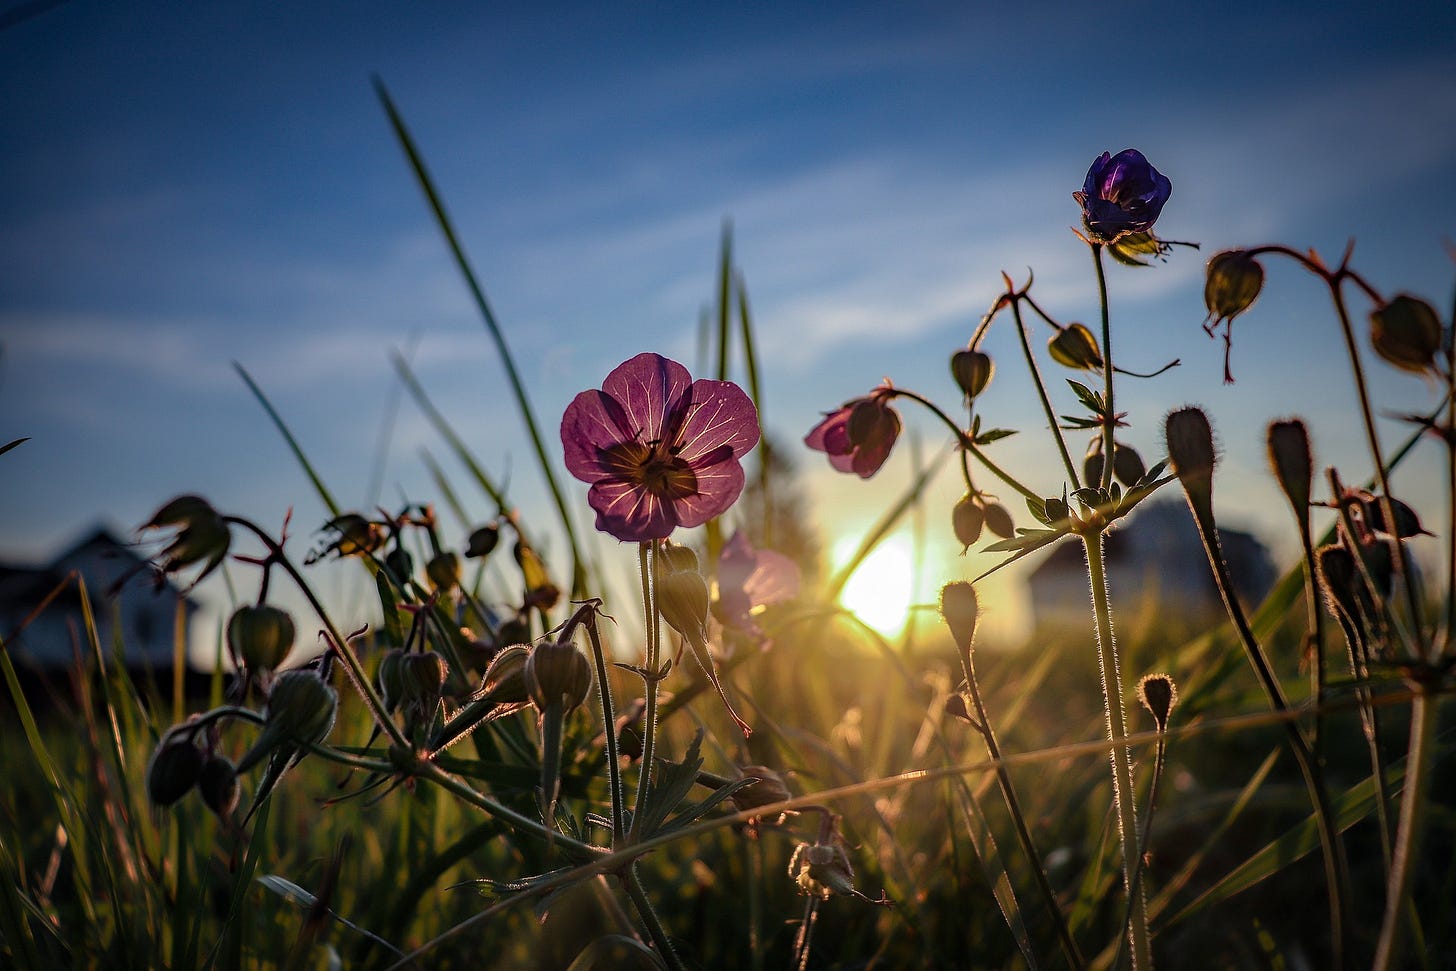 Picture credits: Moiseenko, O. (2019). Field wildflowers